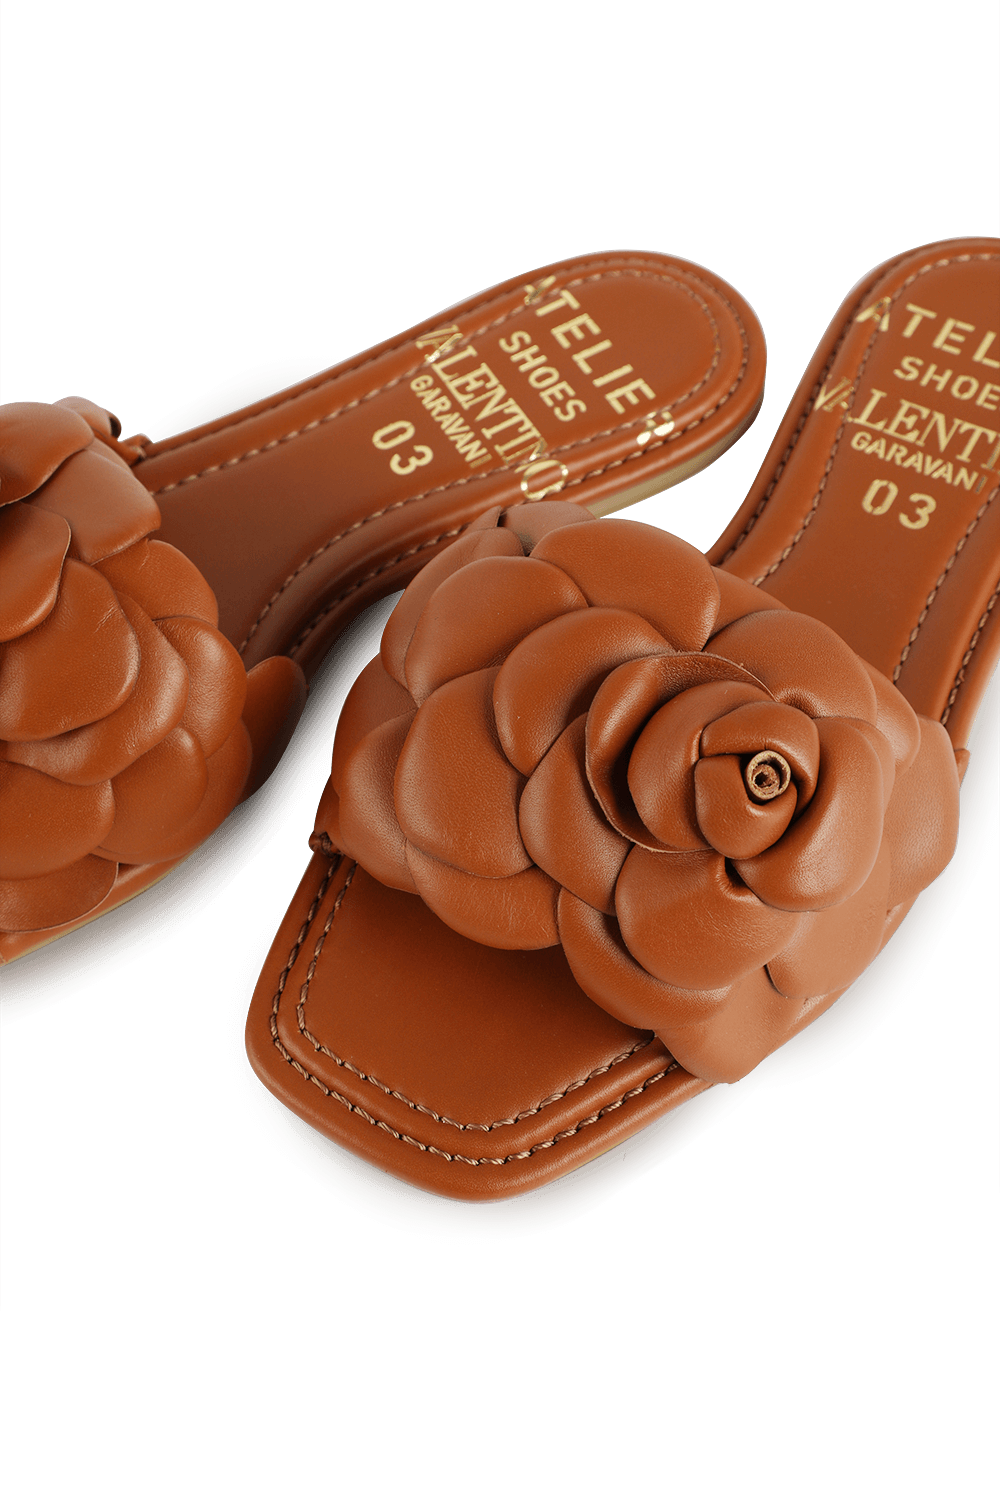 Atelier Shoes 03 Rose Edition Sliders in Brown VALENTINO GARAVANI